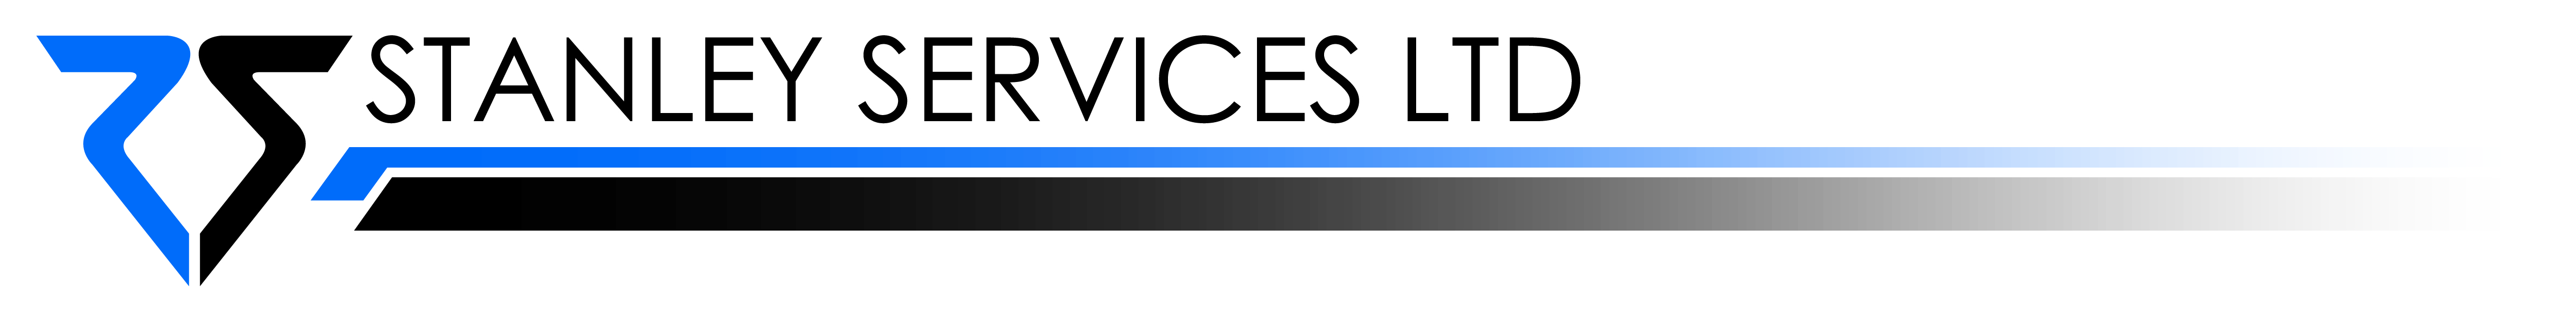 Stanley Services Logo (003)